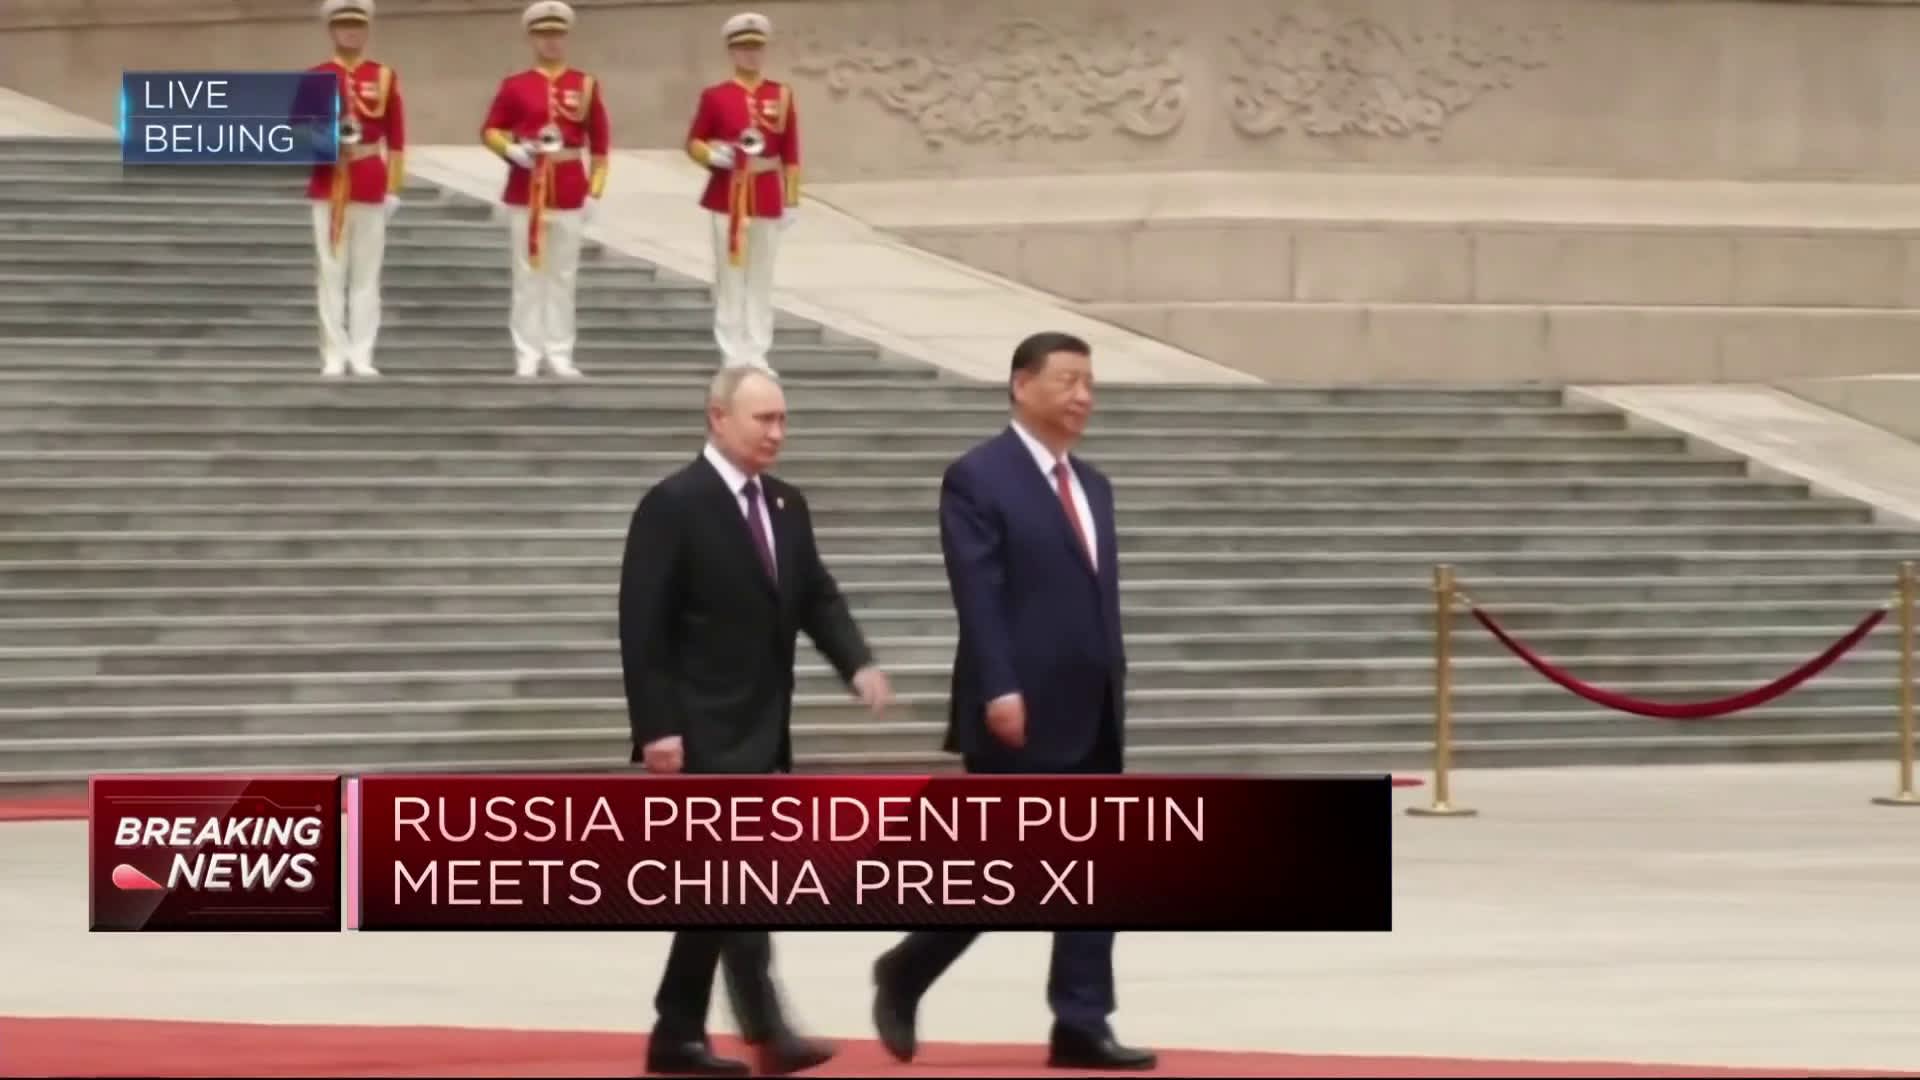 Xi welcomes Putin to China as both leaders seek to bolster strategic ties [Video]